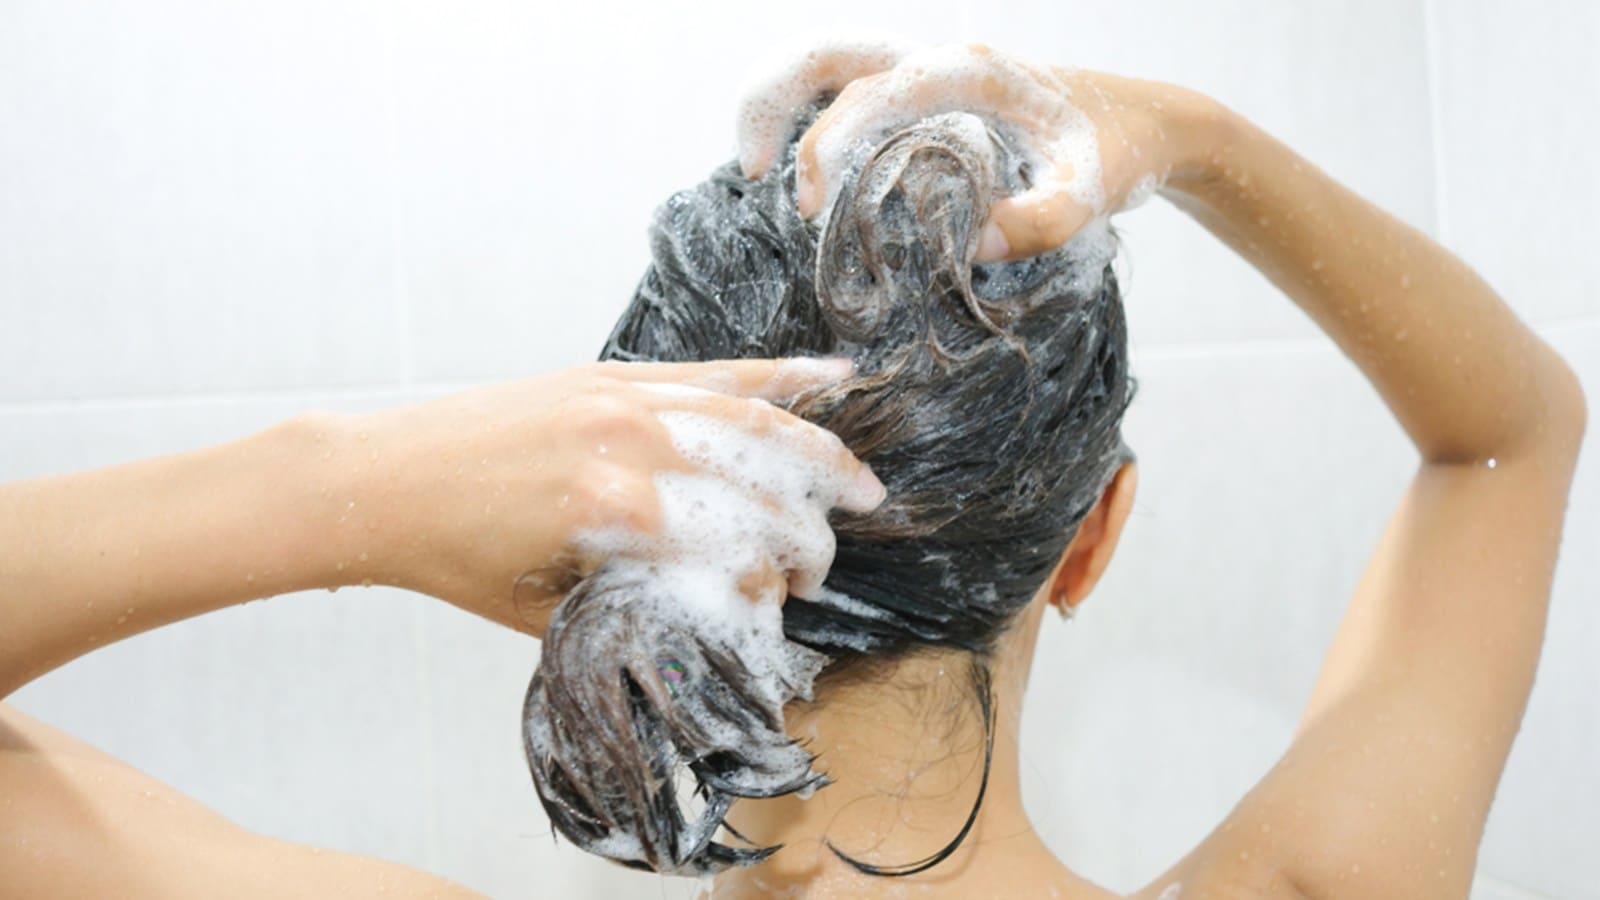 woman washing her hair